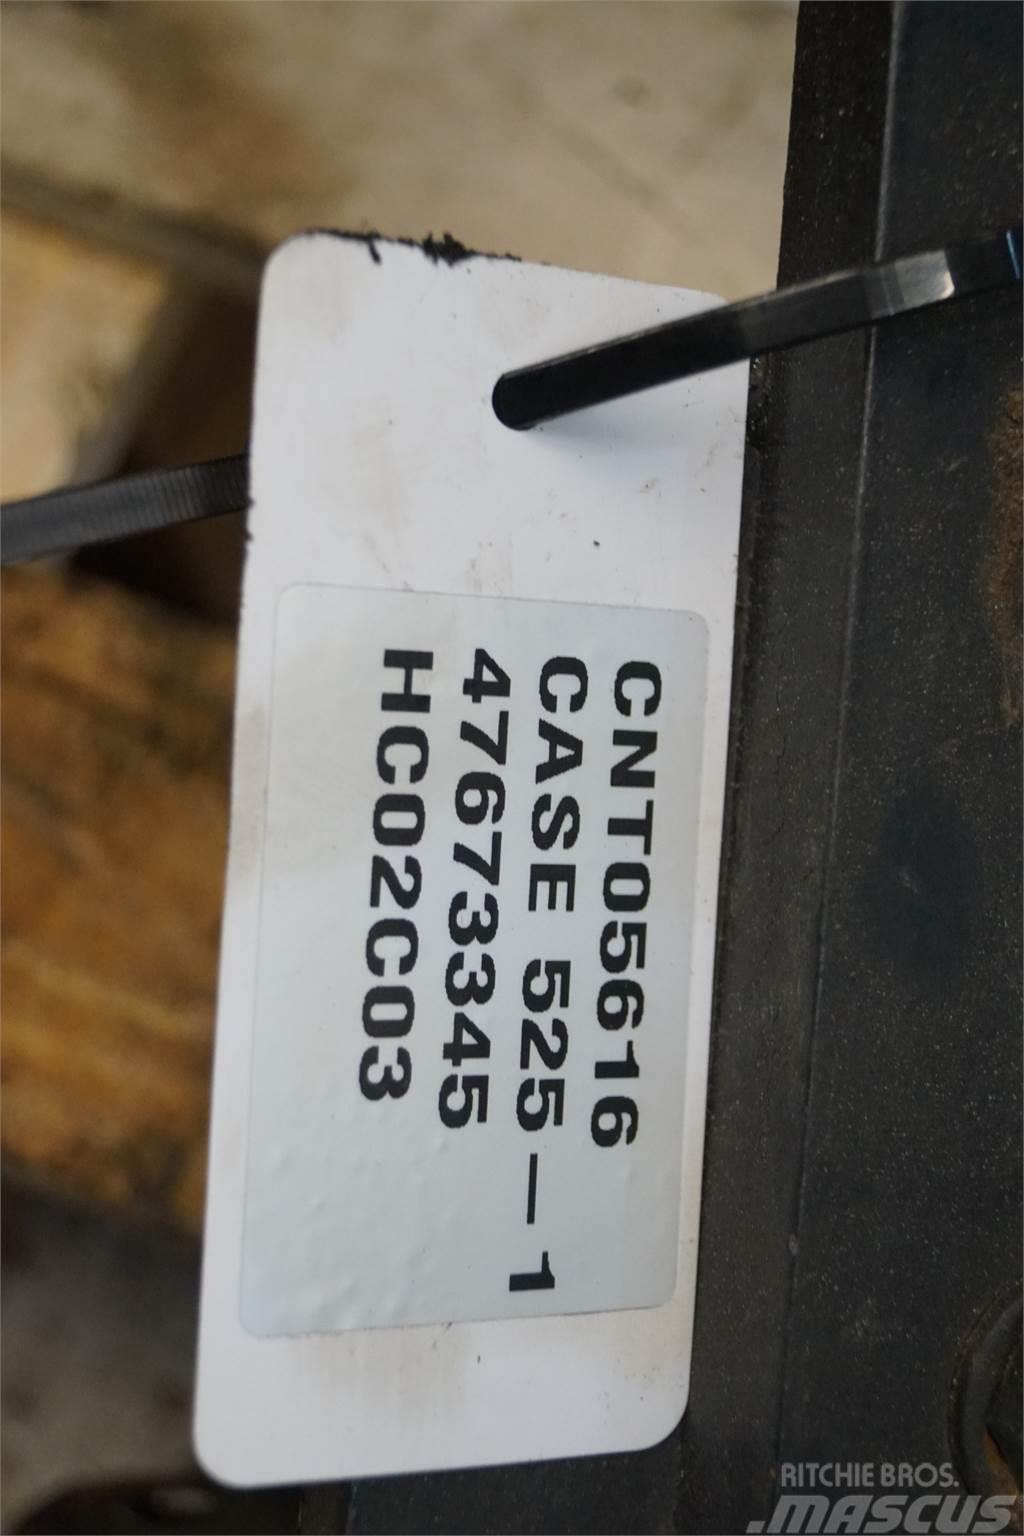 Case IH 525 Cucharas separadoras